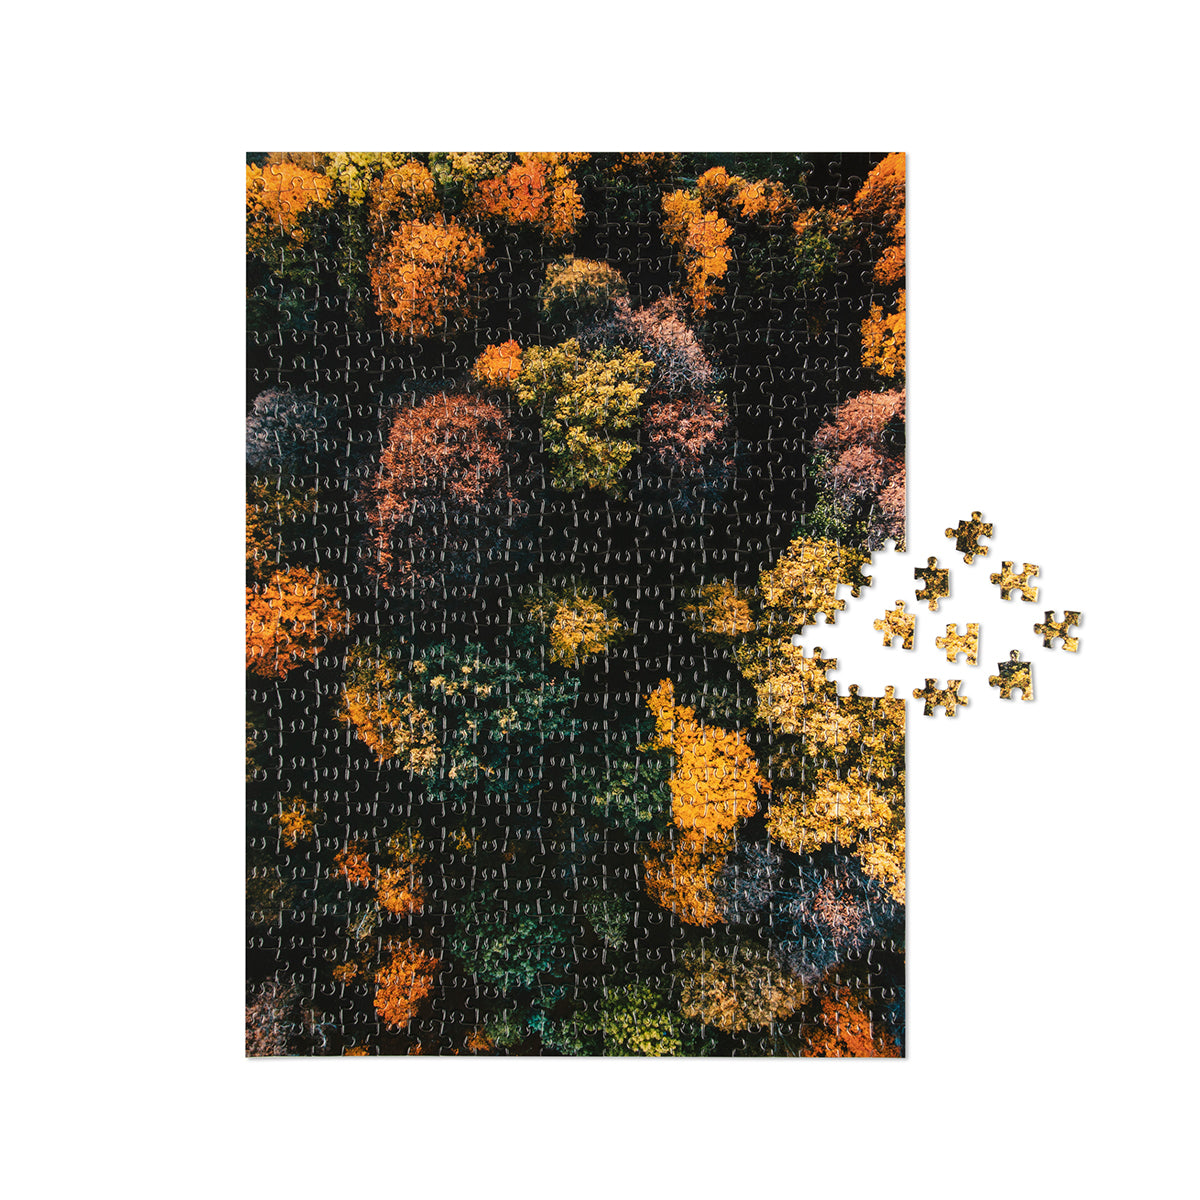 Puzzle Trees (500 Piece)